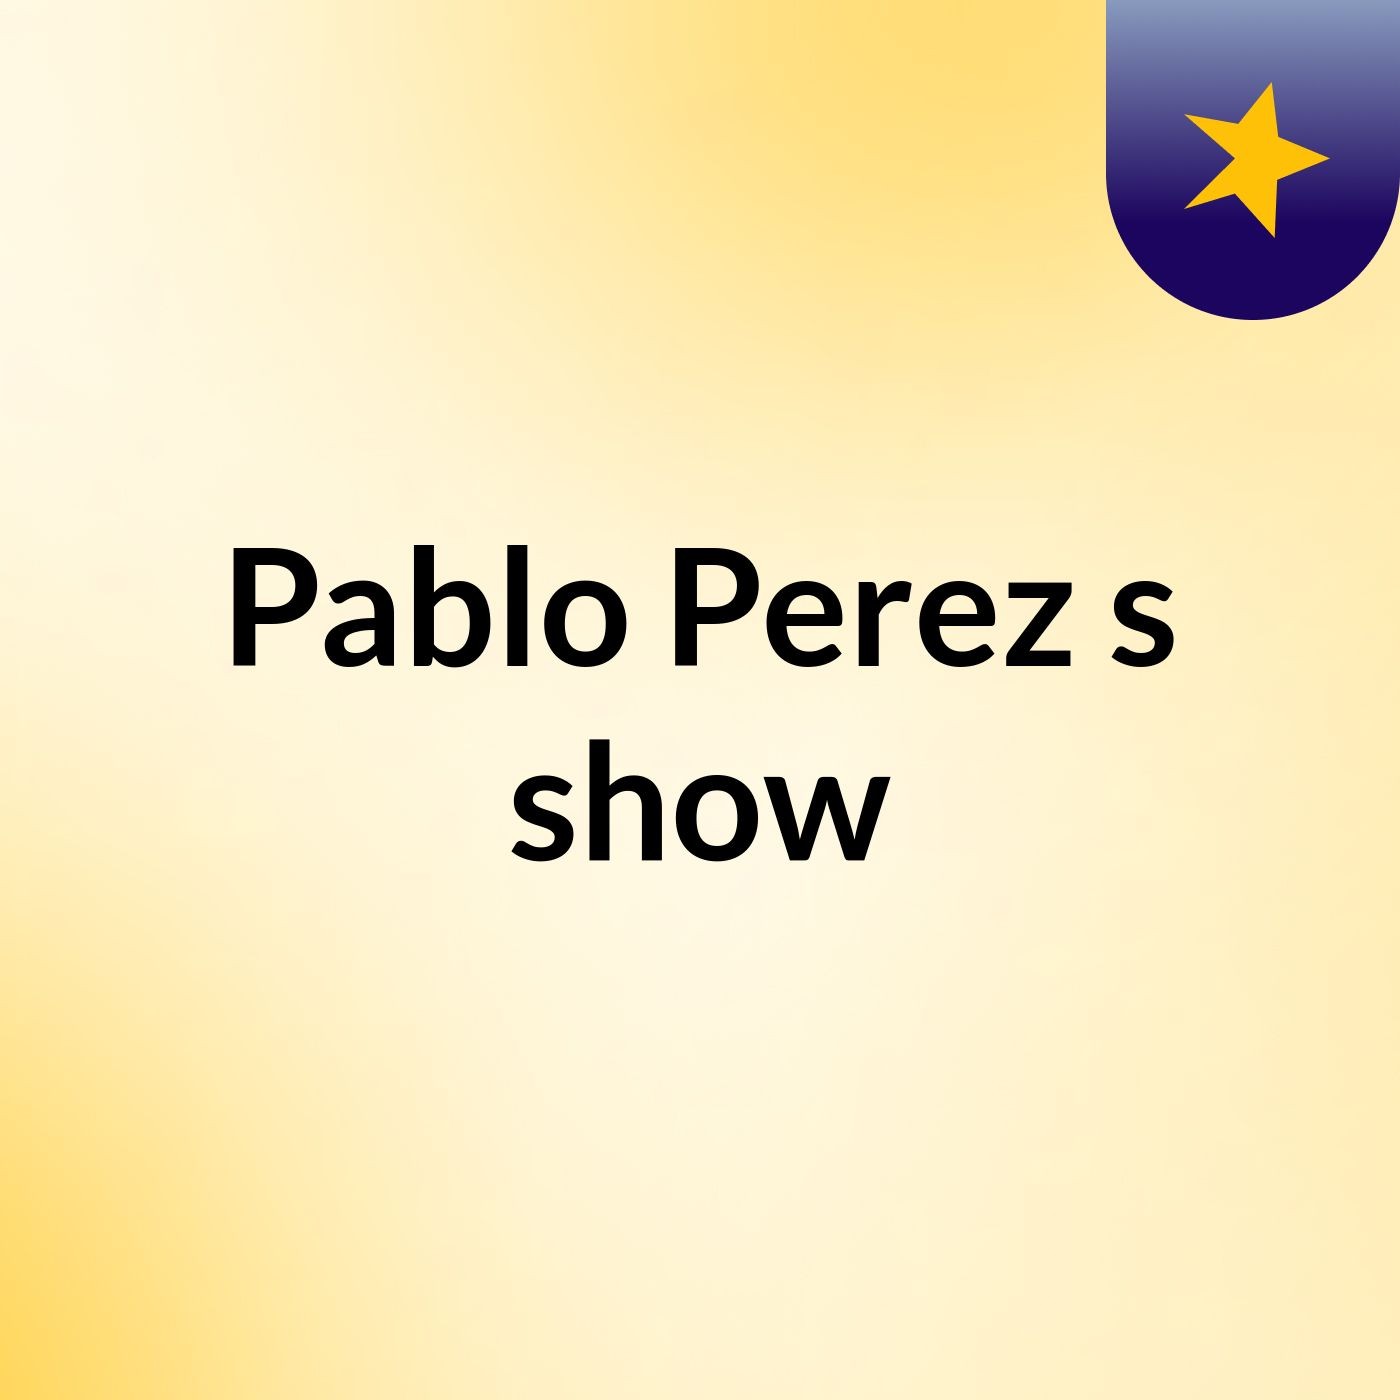 Pablo Perez's show